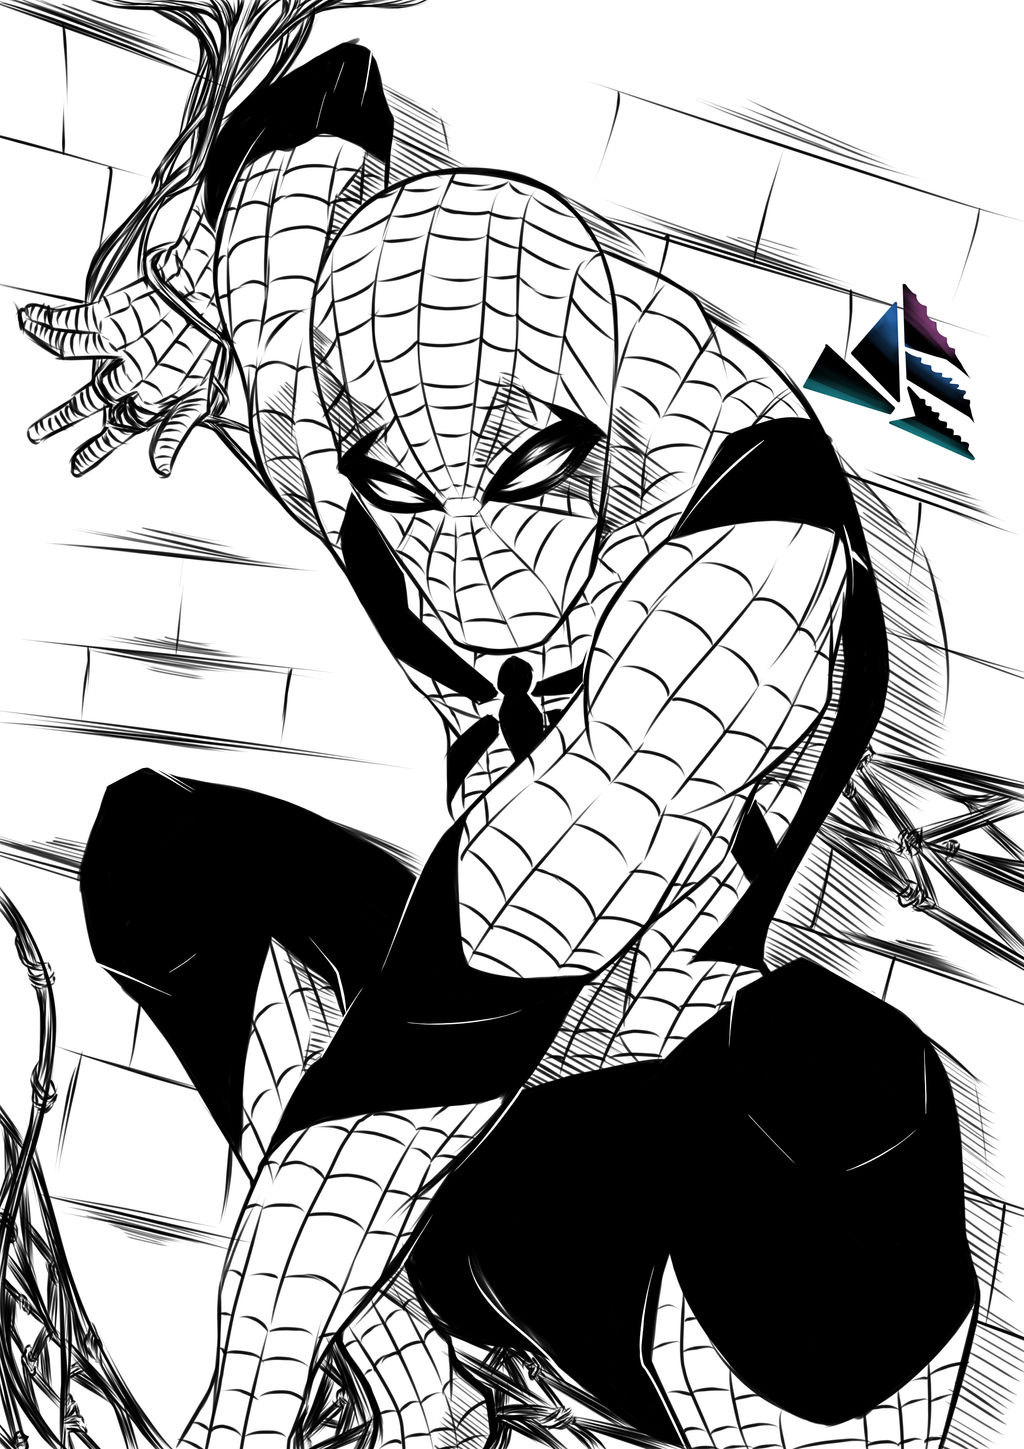 Spiderman a blanco y negro by EdgarGaytan on DeviantArt